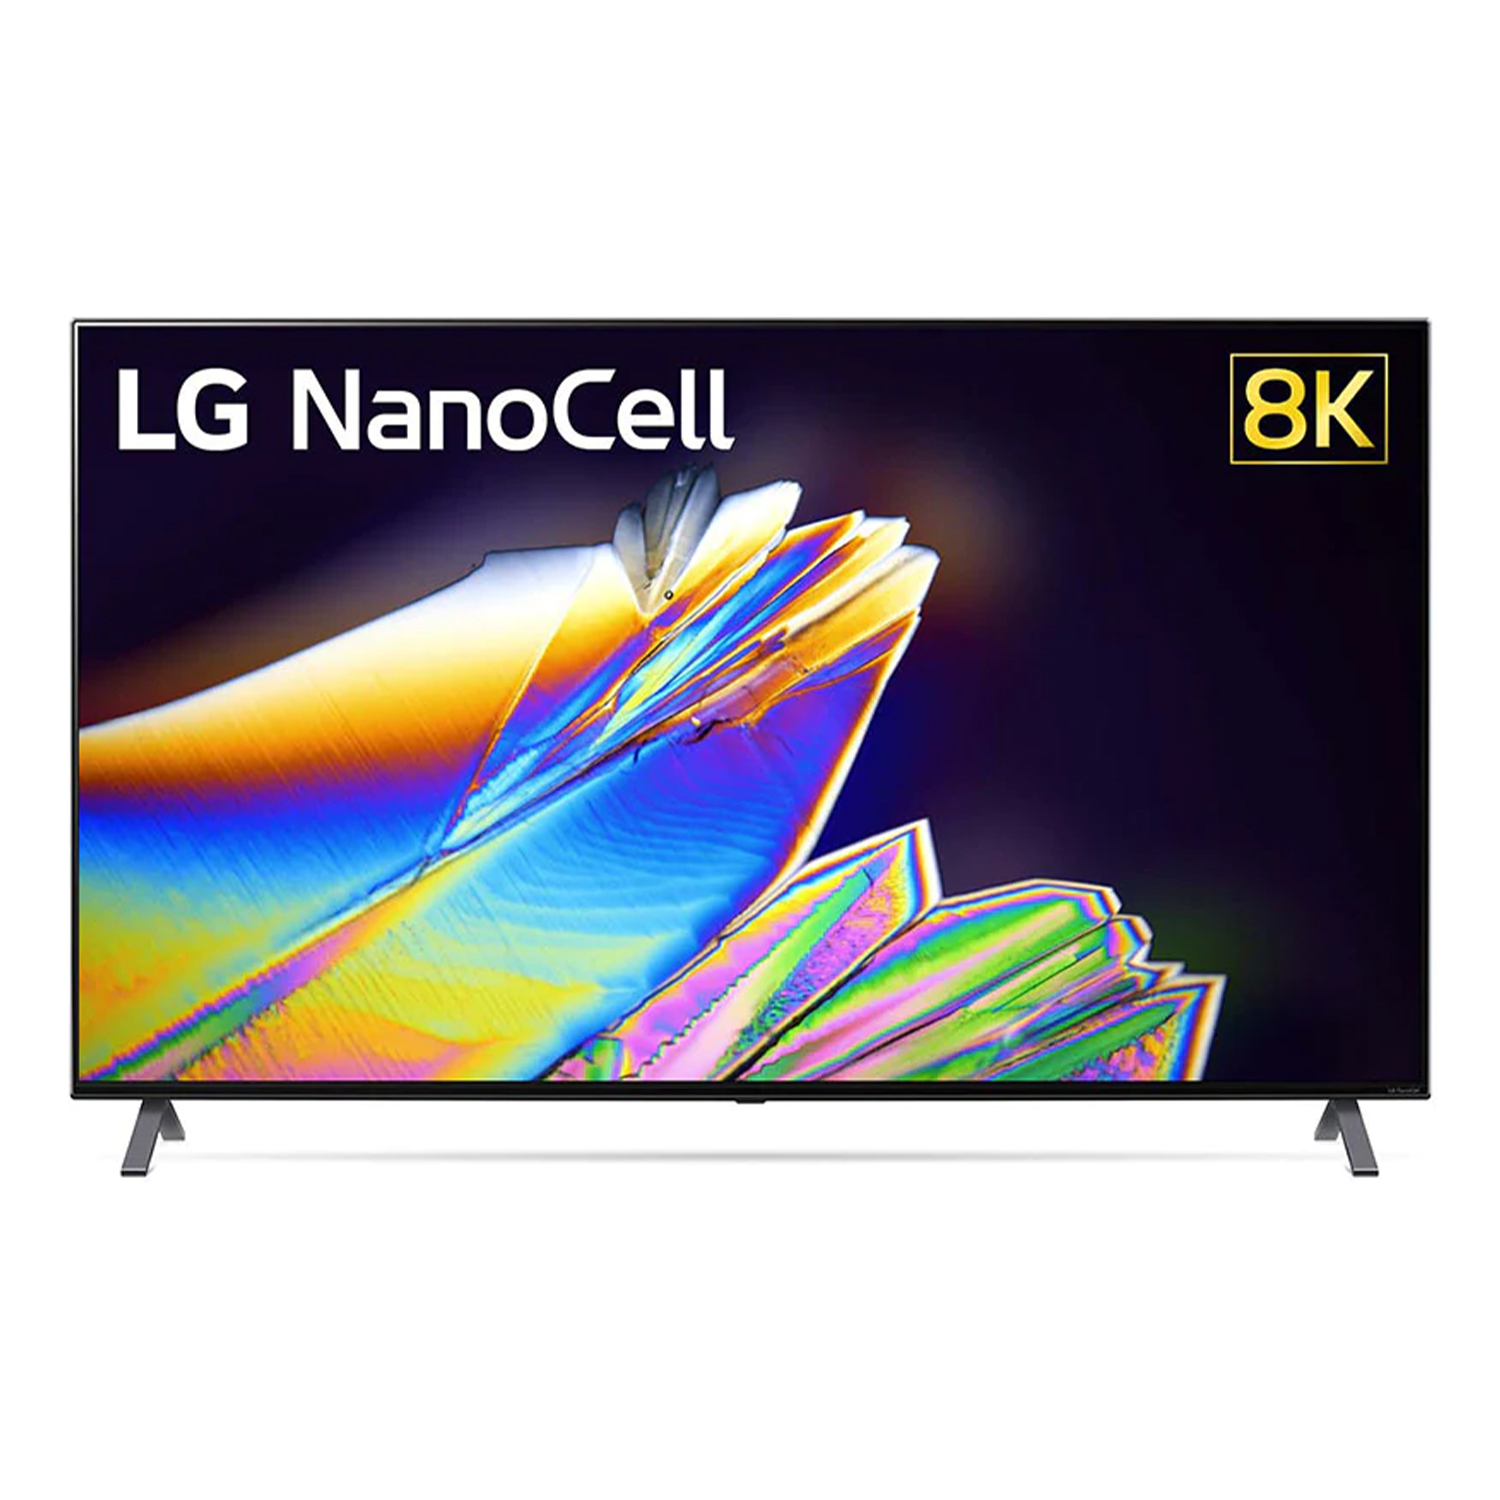 lg-65-inch-nanocell-8k-smart-tv